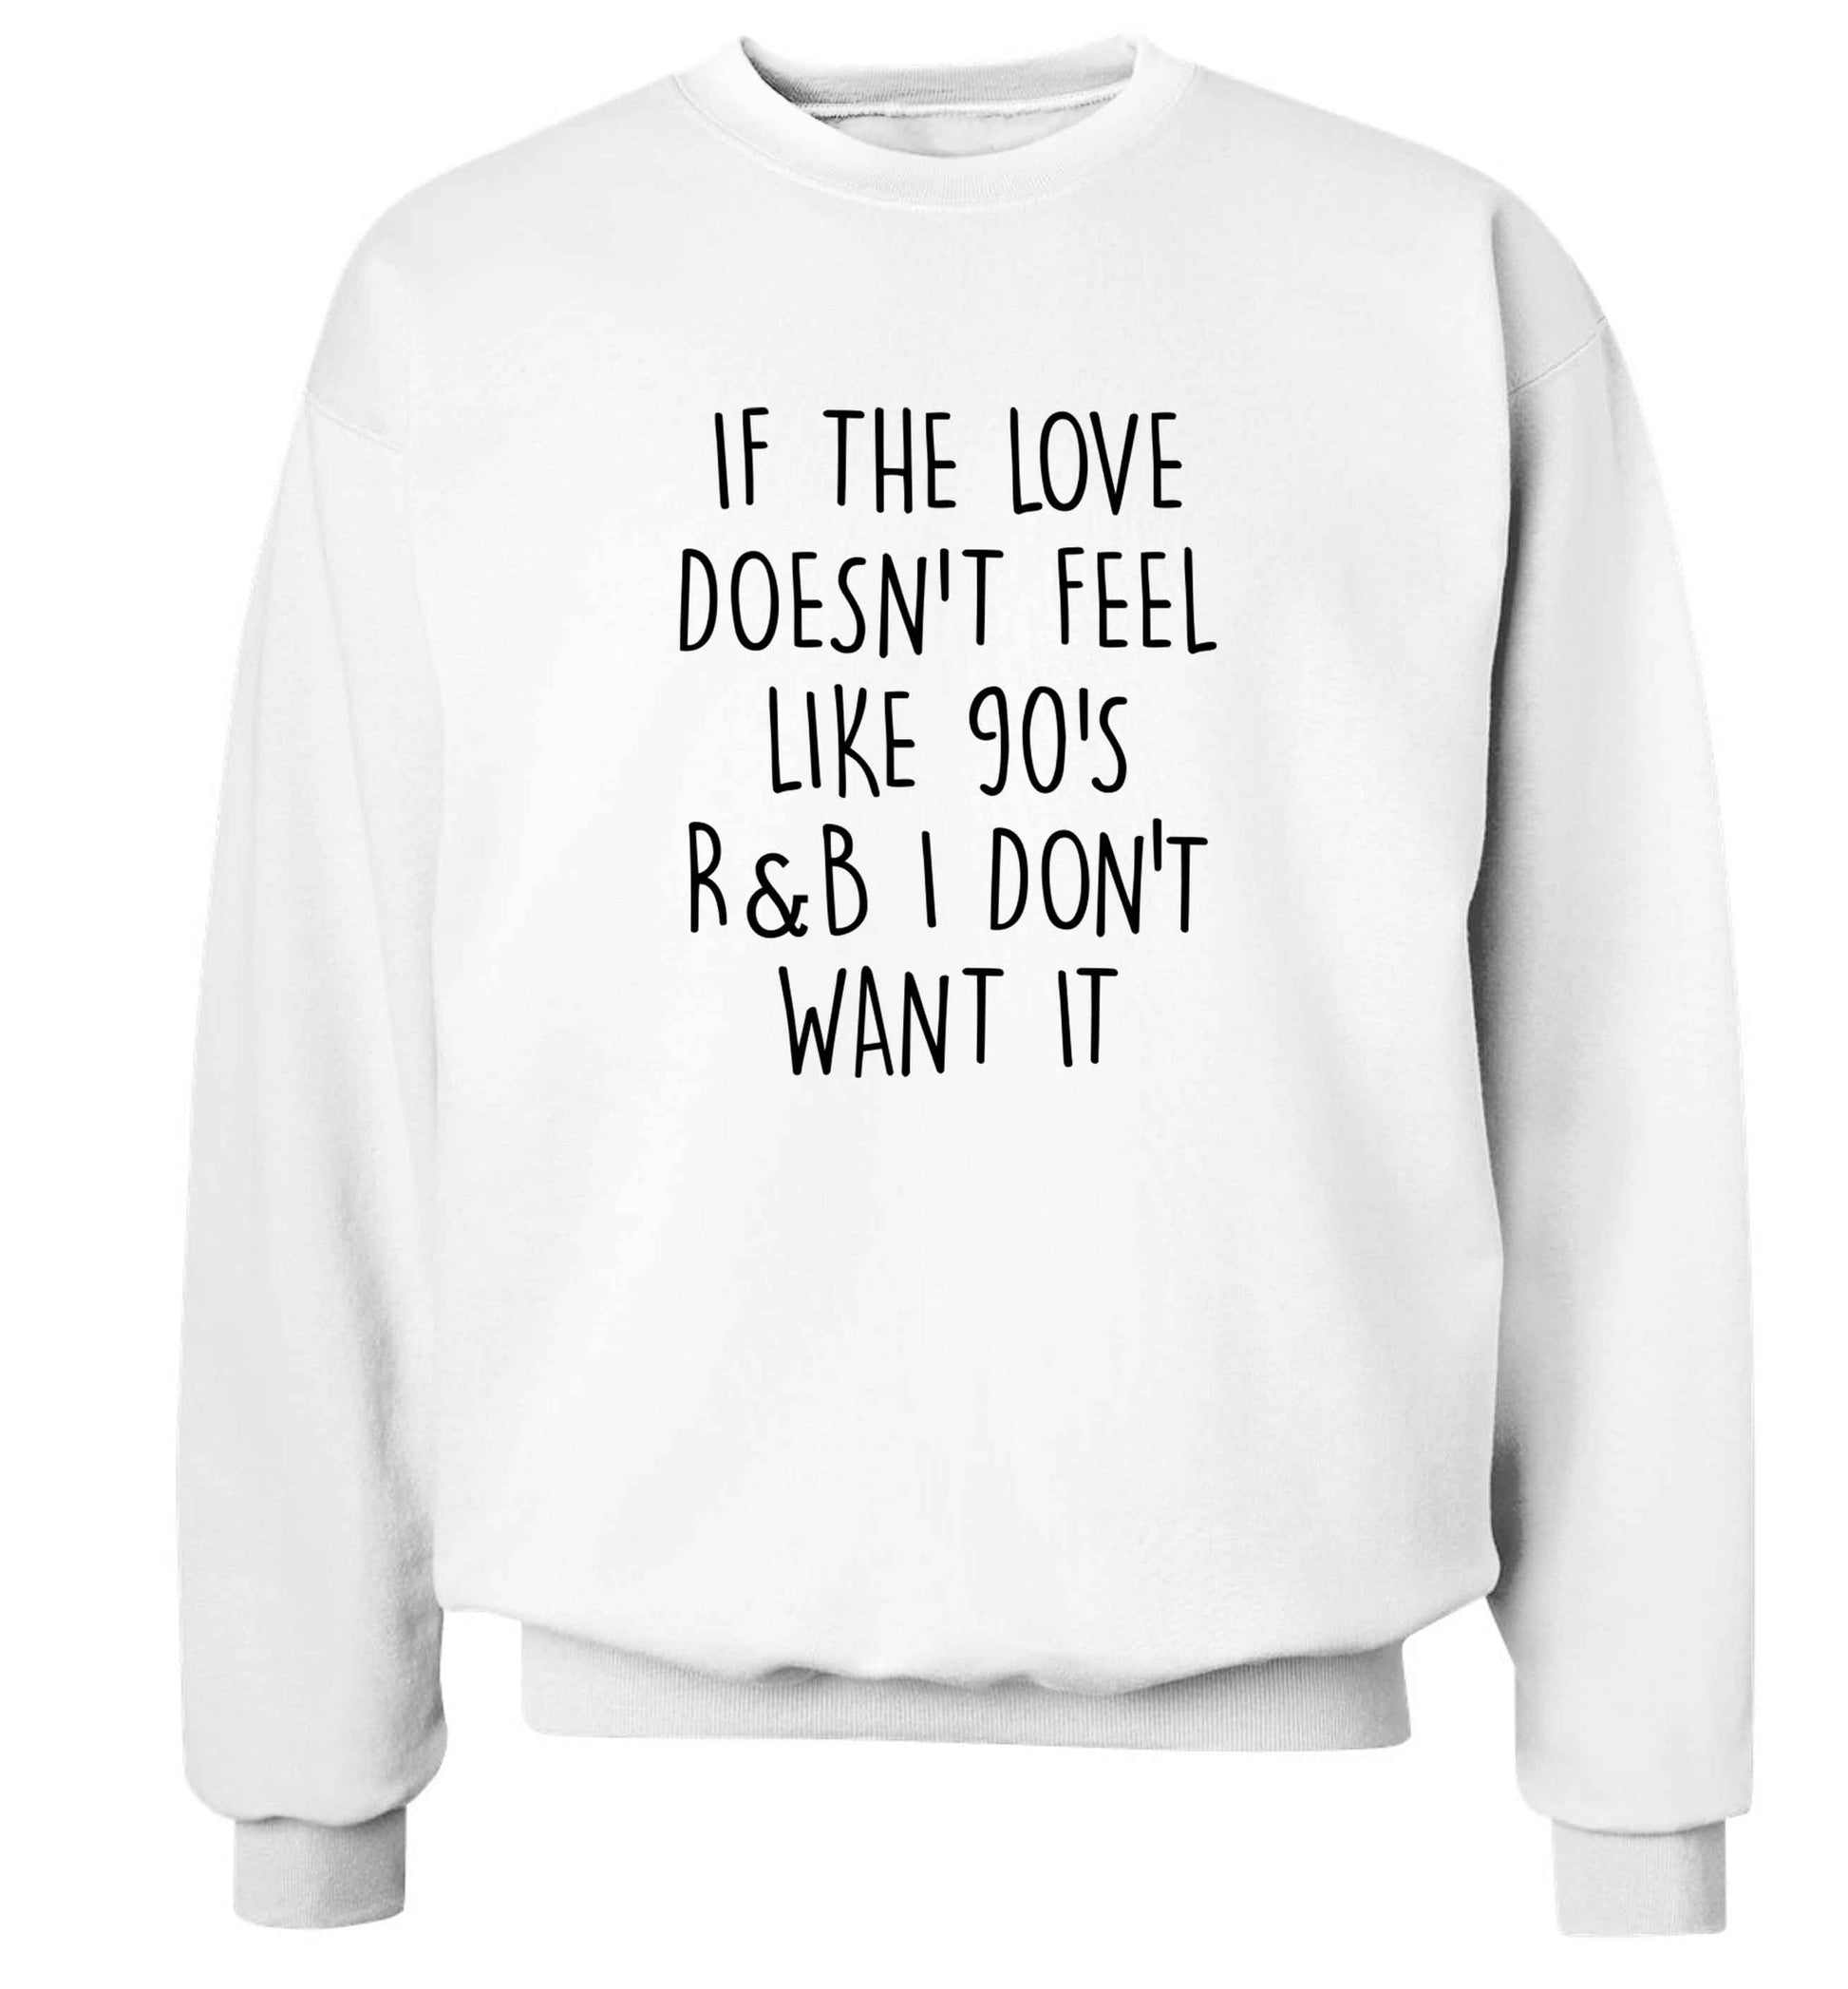 If the love doesn't feel like 90's r&b I don't want it adult's unisex white sweater 2XL